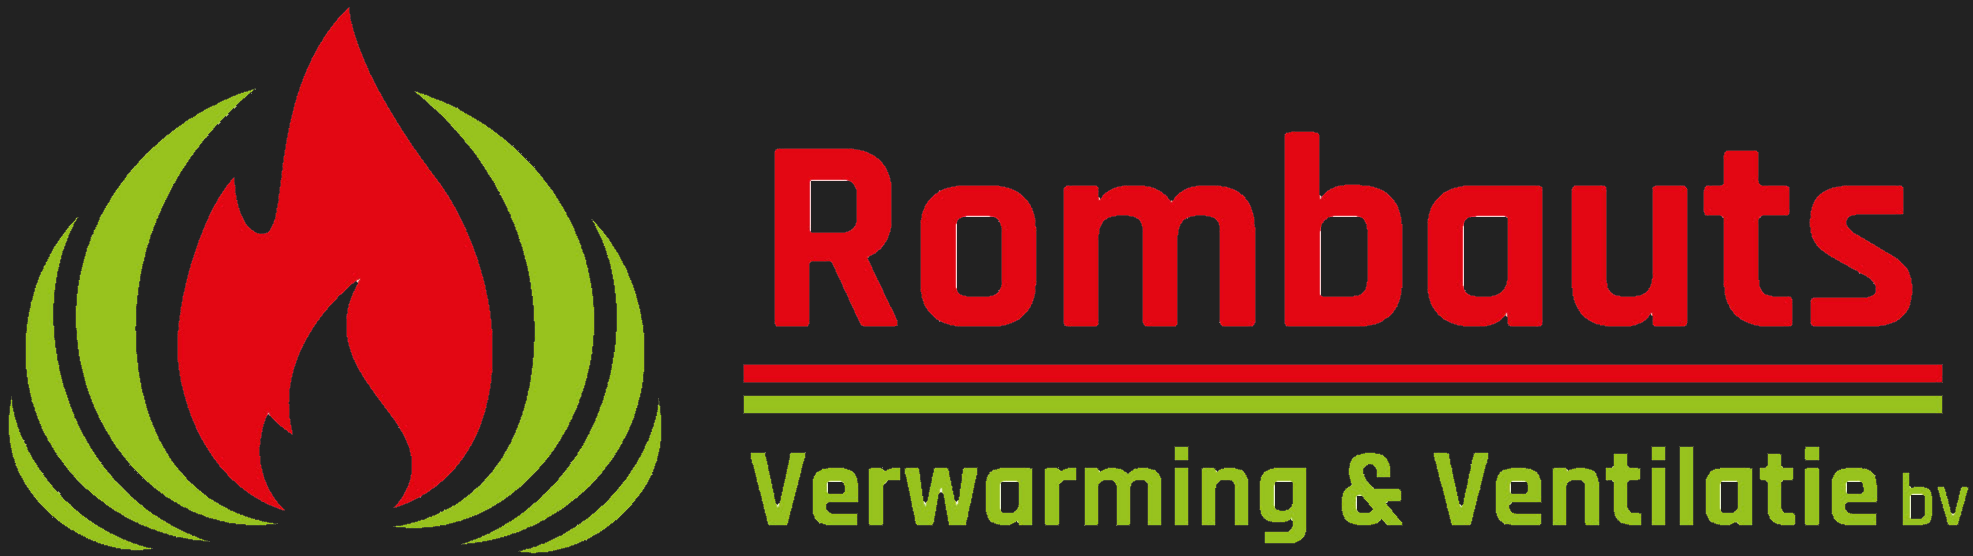 rombauts verwarming - logo20 - basic-black3